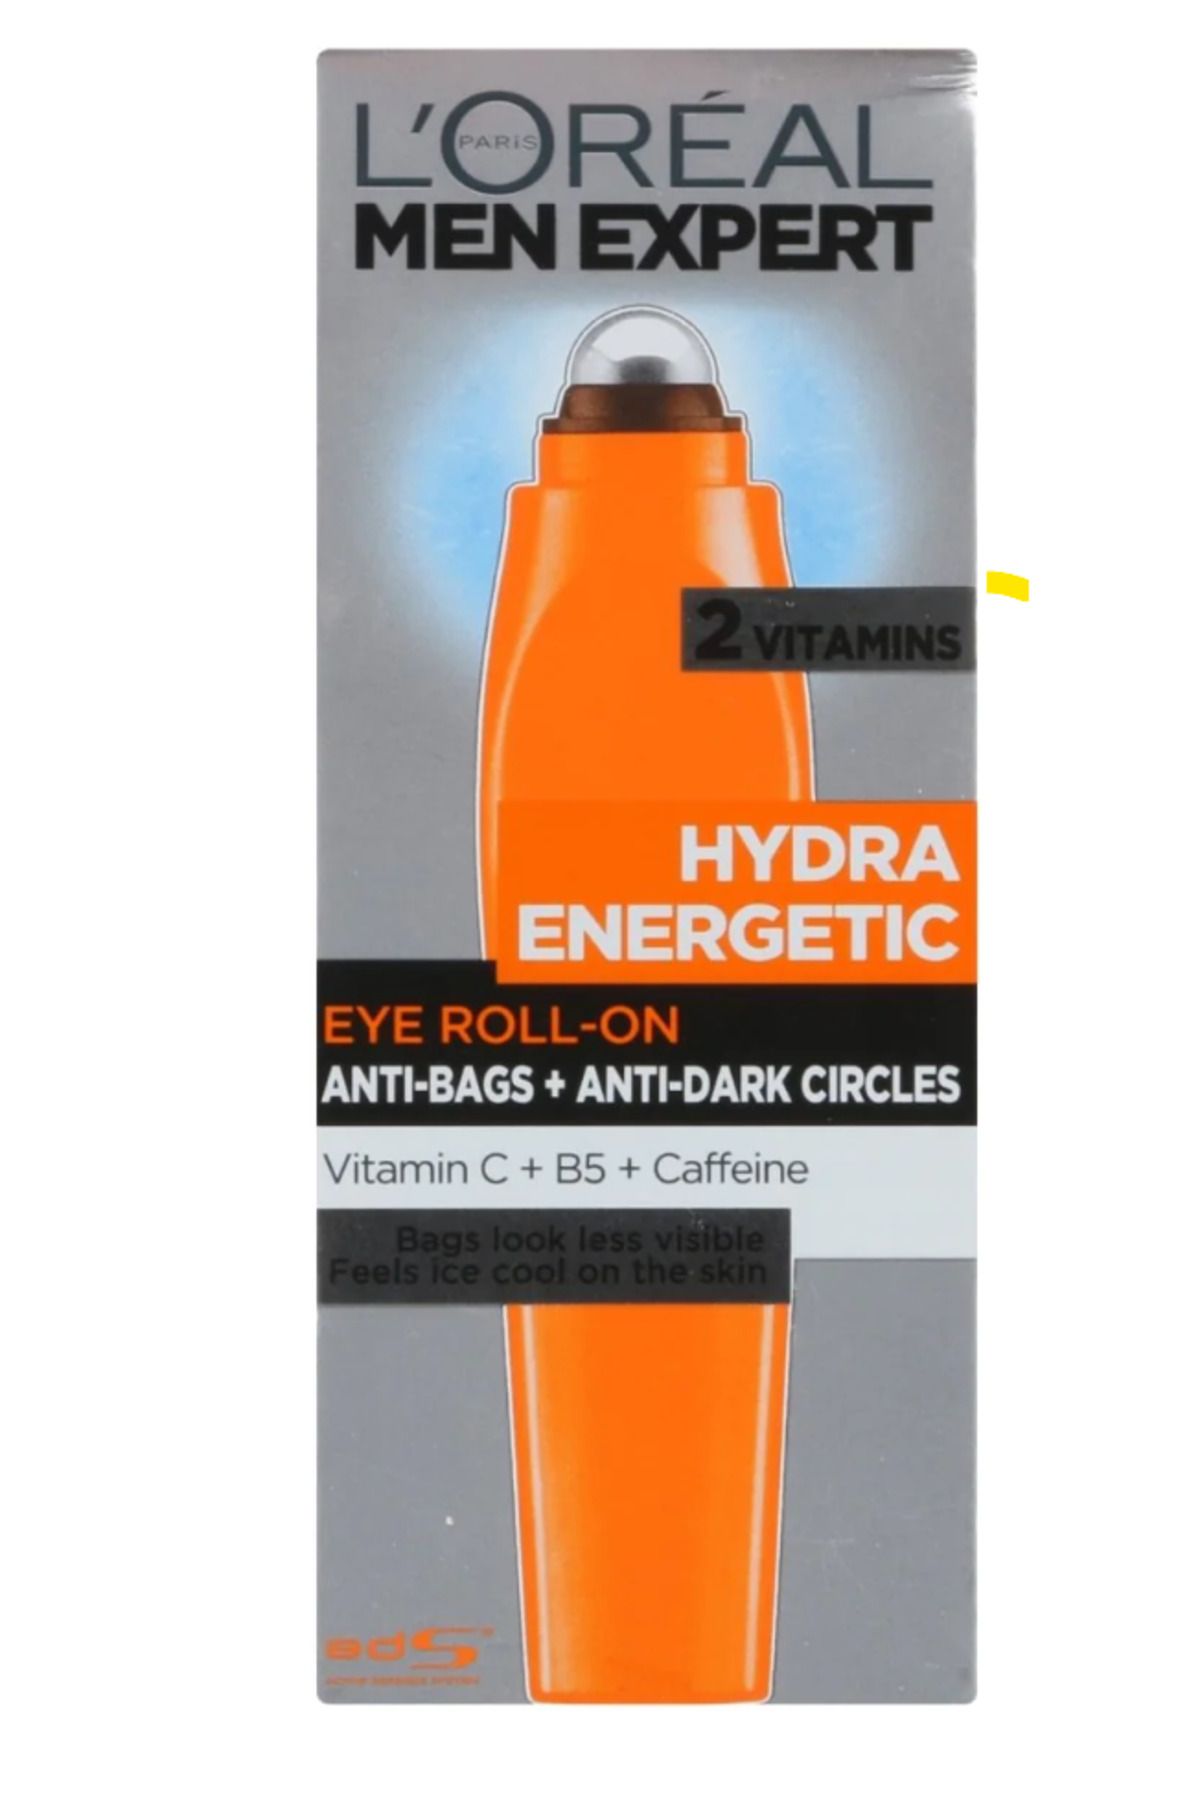 L'Oreal Paris Men Expert Hydra Energetic Yorgunluk Karşıtı Krem Göz Roll-On, C Vitamini ile, 10 ml